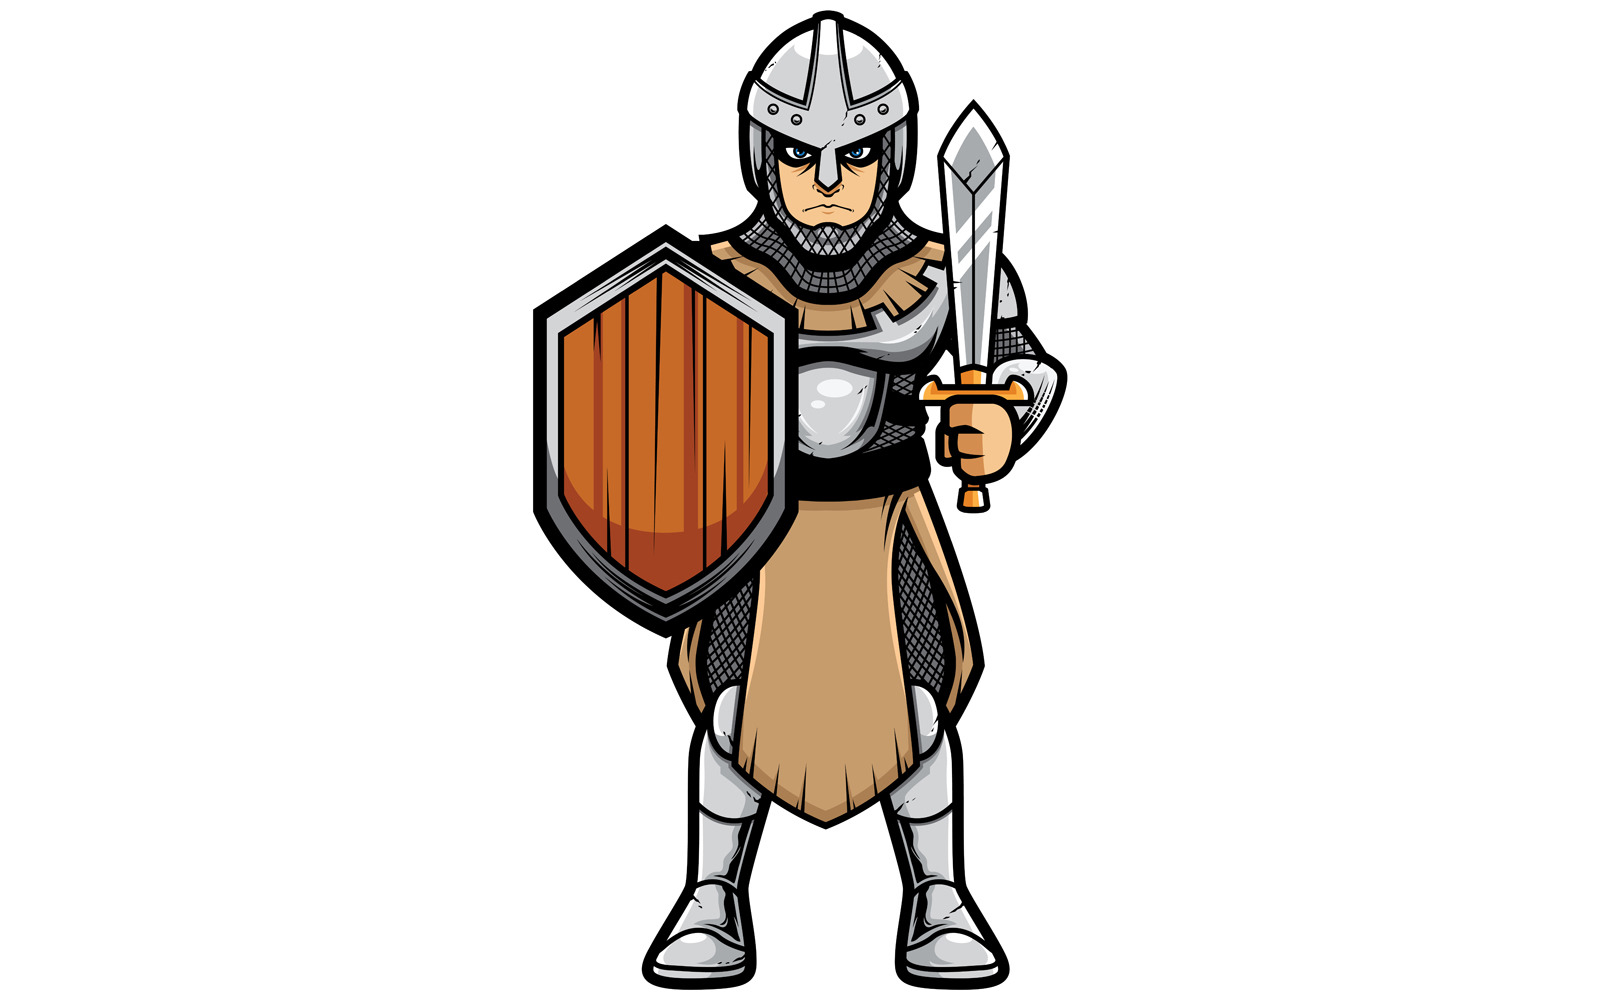 Medieval Soldier on White - Illustration - TemplateMonster